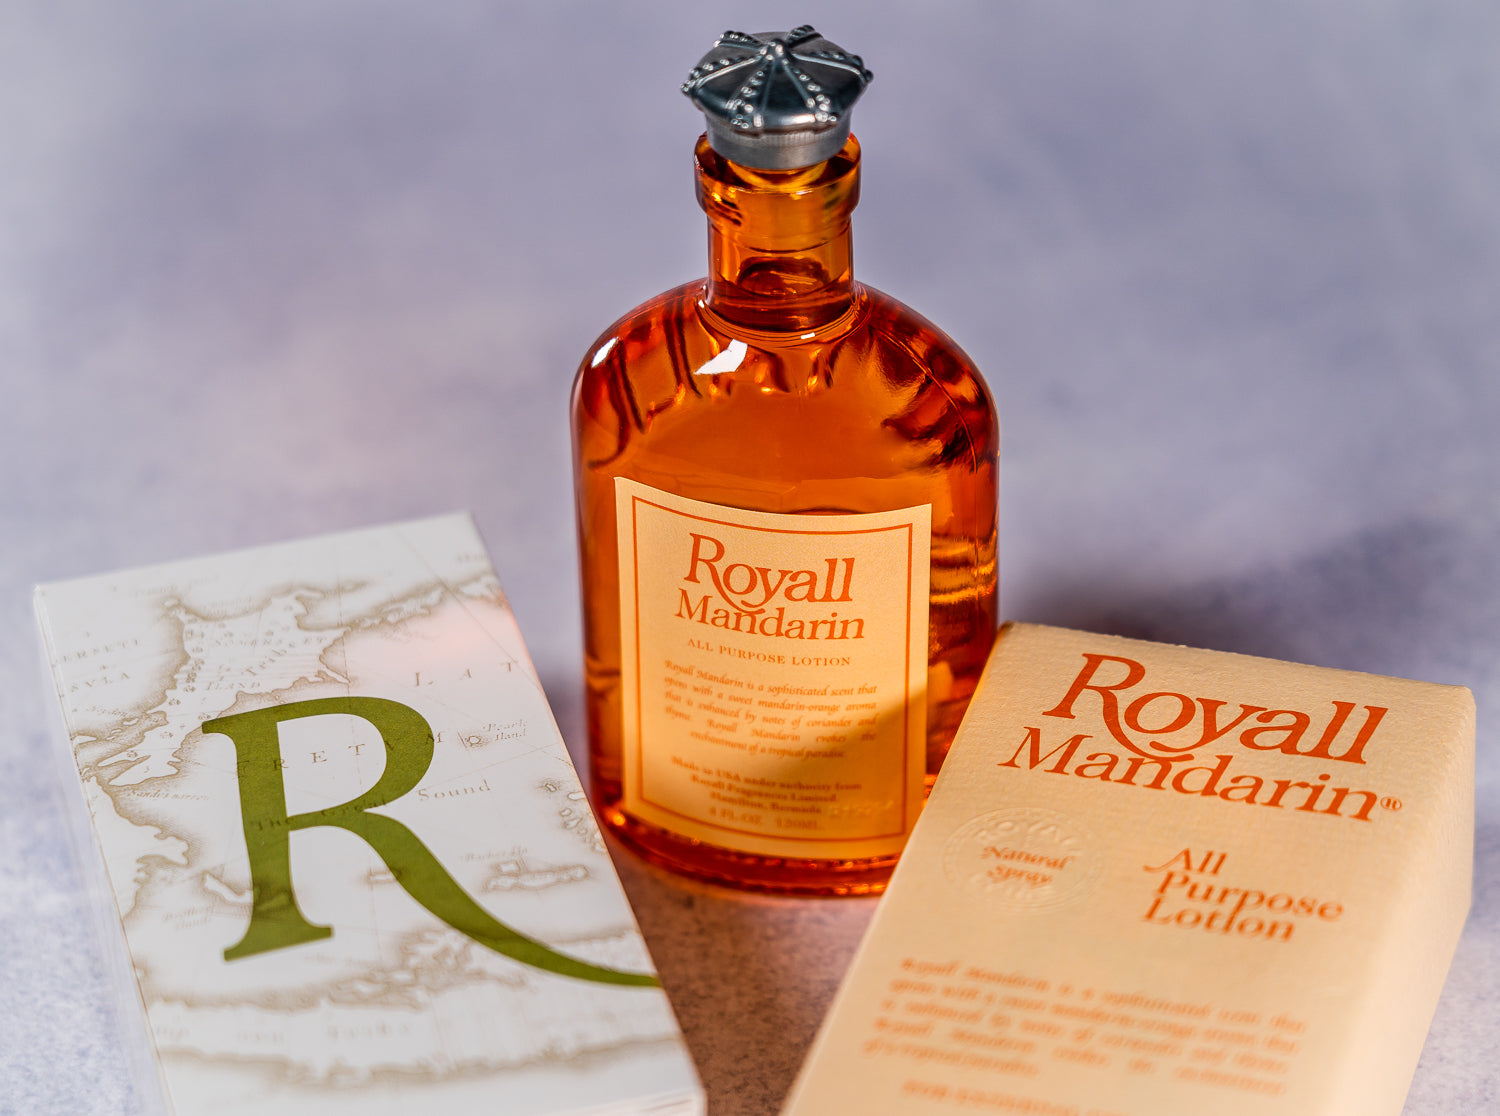 Royall Mandarin by Royall Fragrances, 8 oz All Purpose Lotion for Men